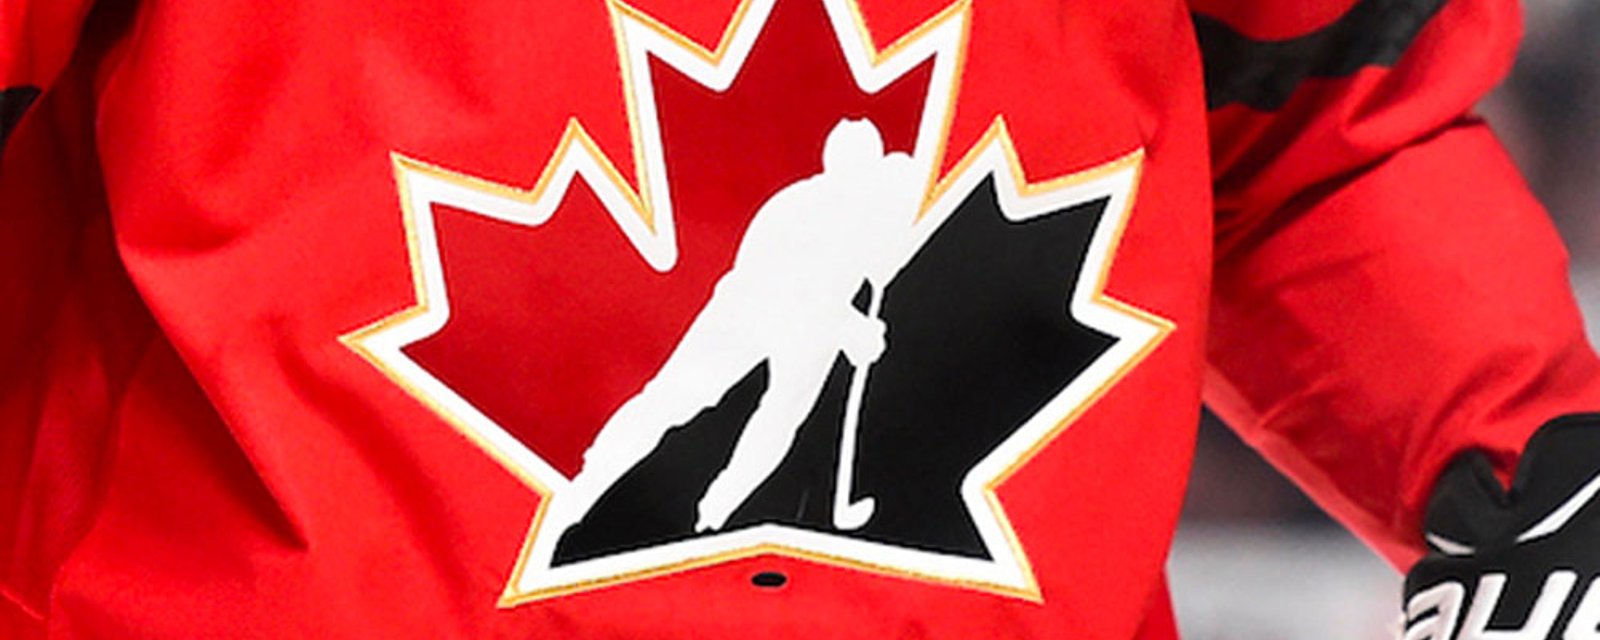 Hockey Canada officially removes “Midget” wording from minor hockey after public backlash 